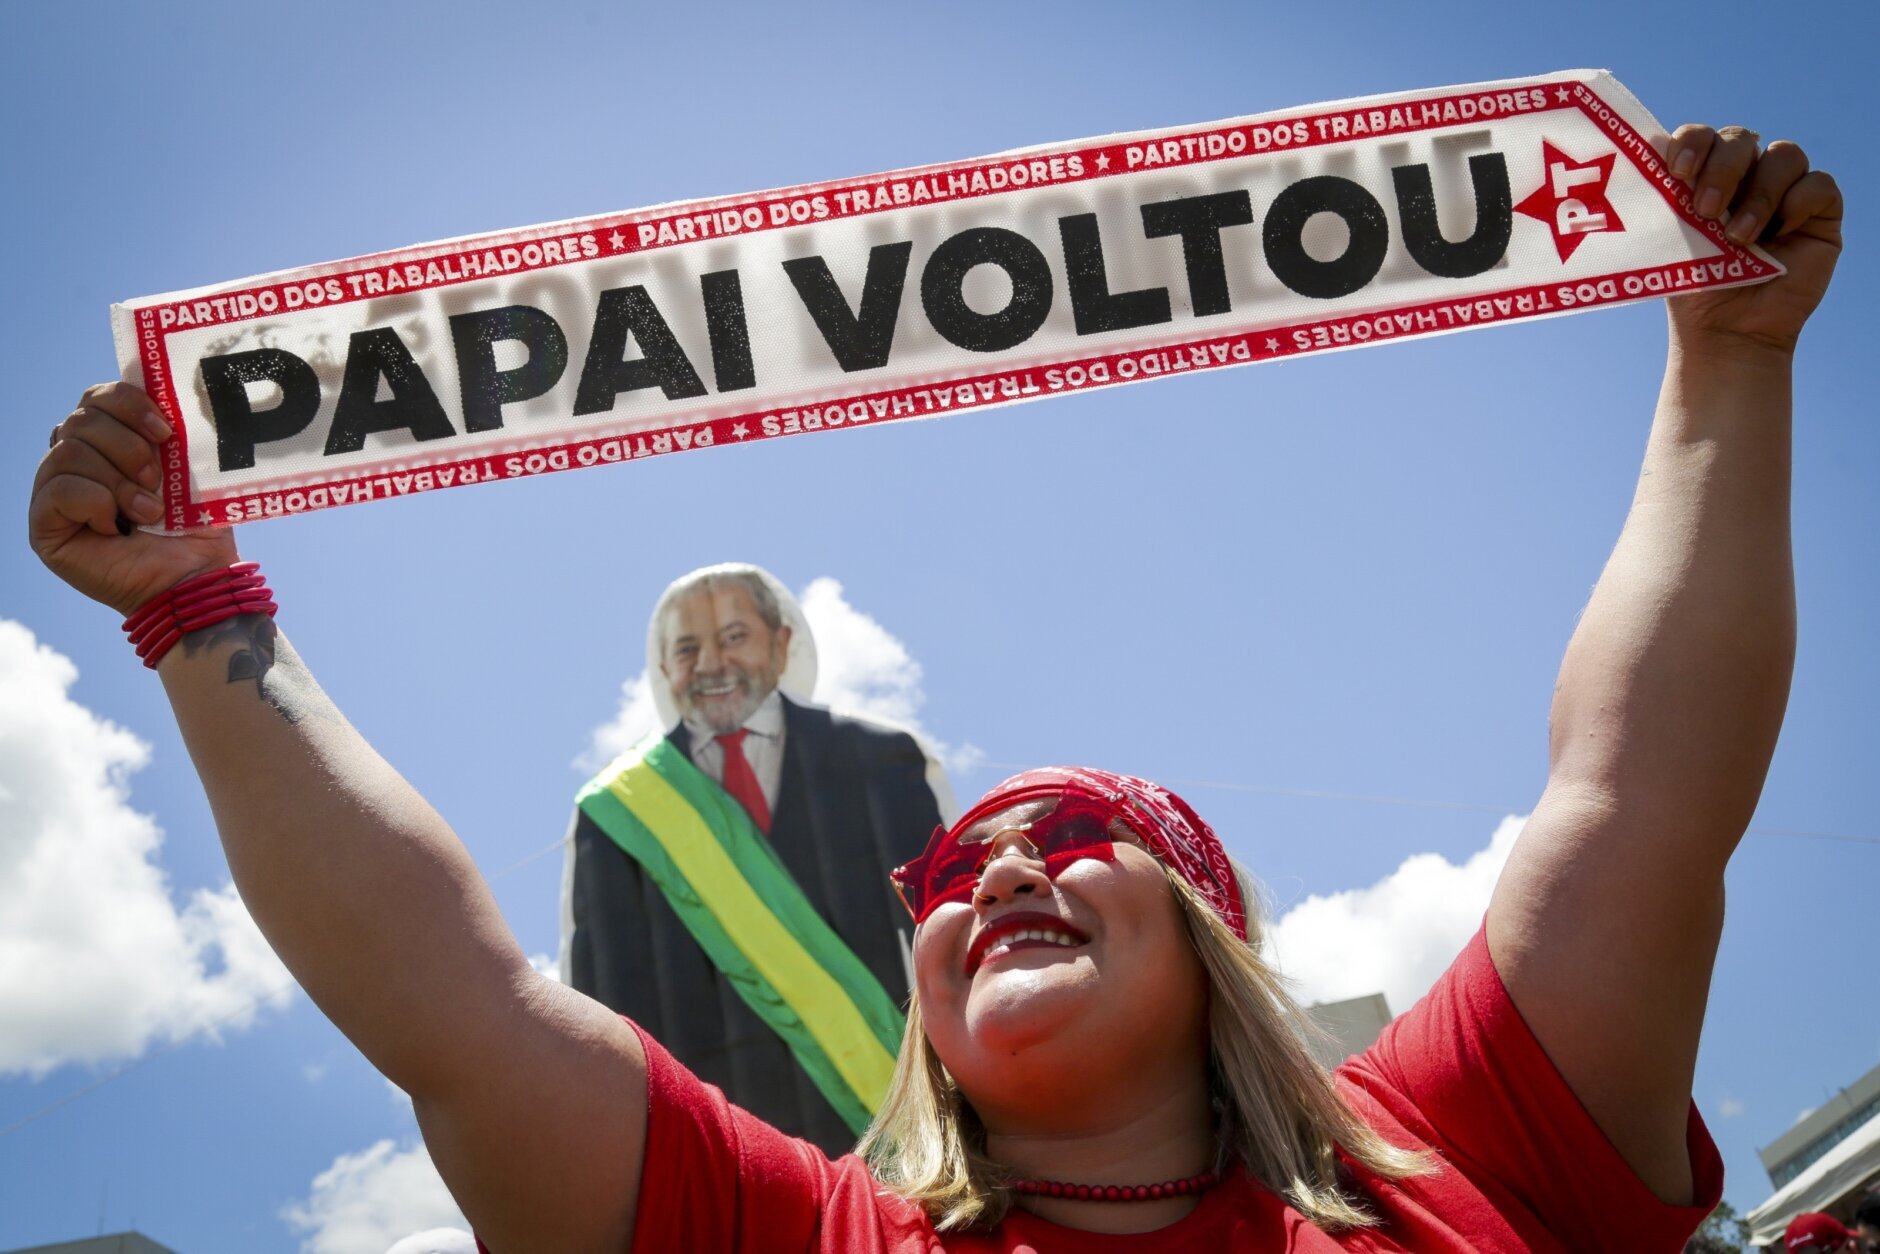 Surging support for Brazil's Lula da Silva unnerves markets